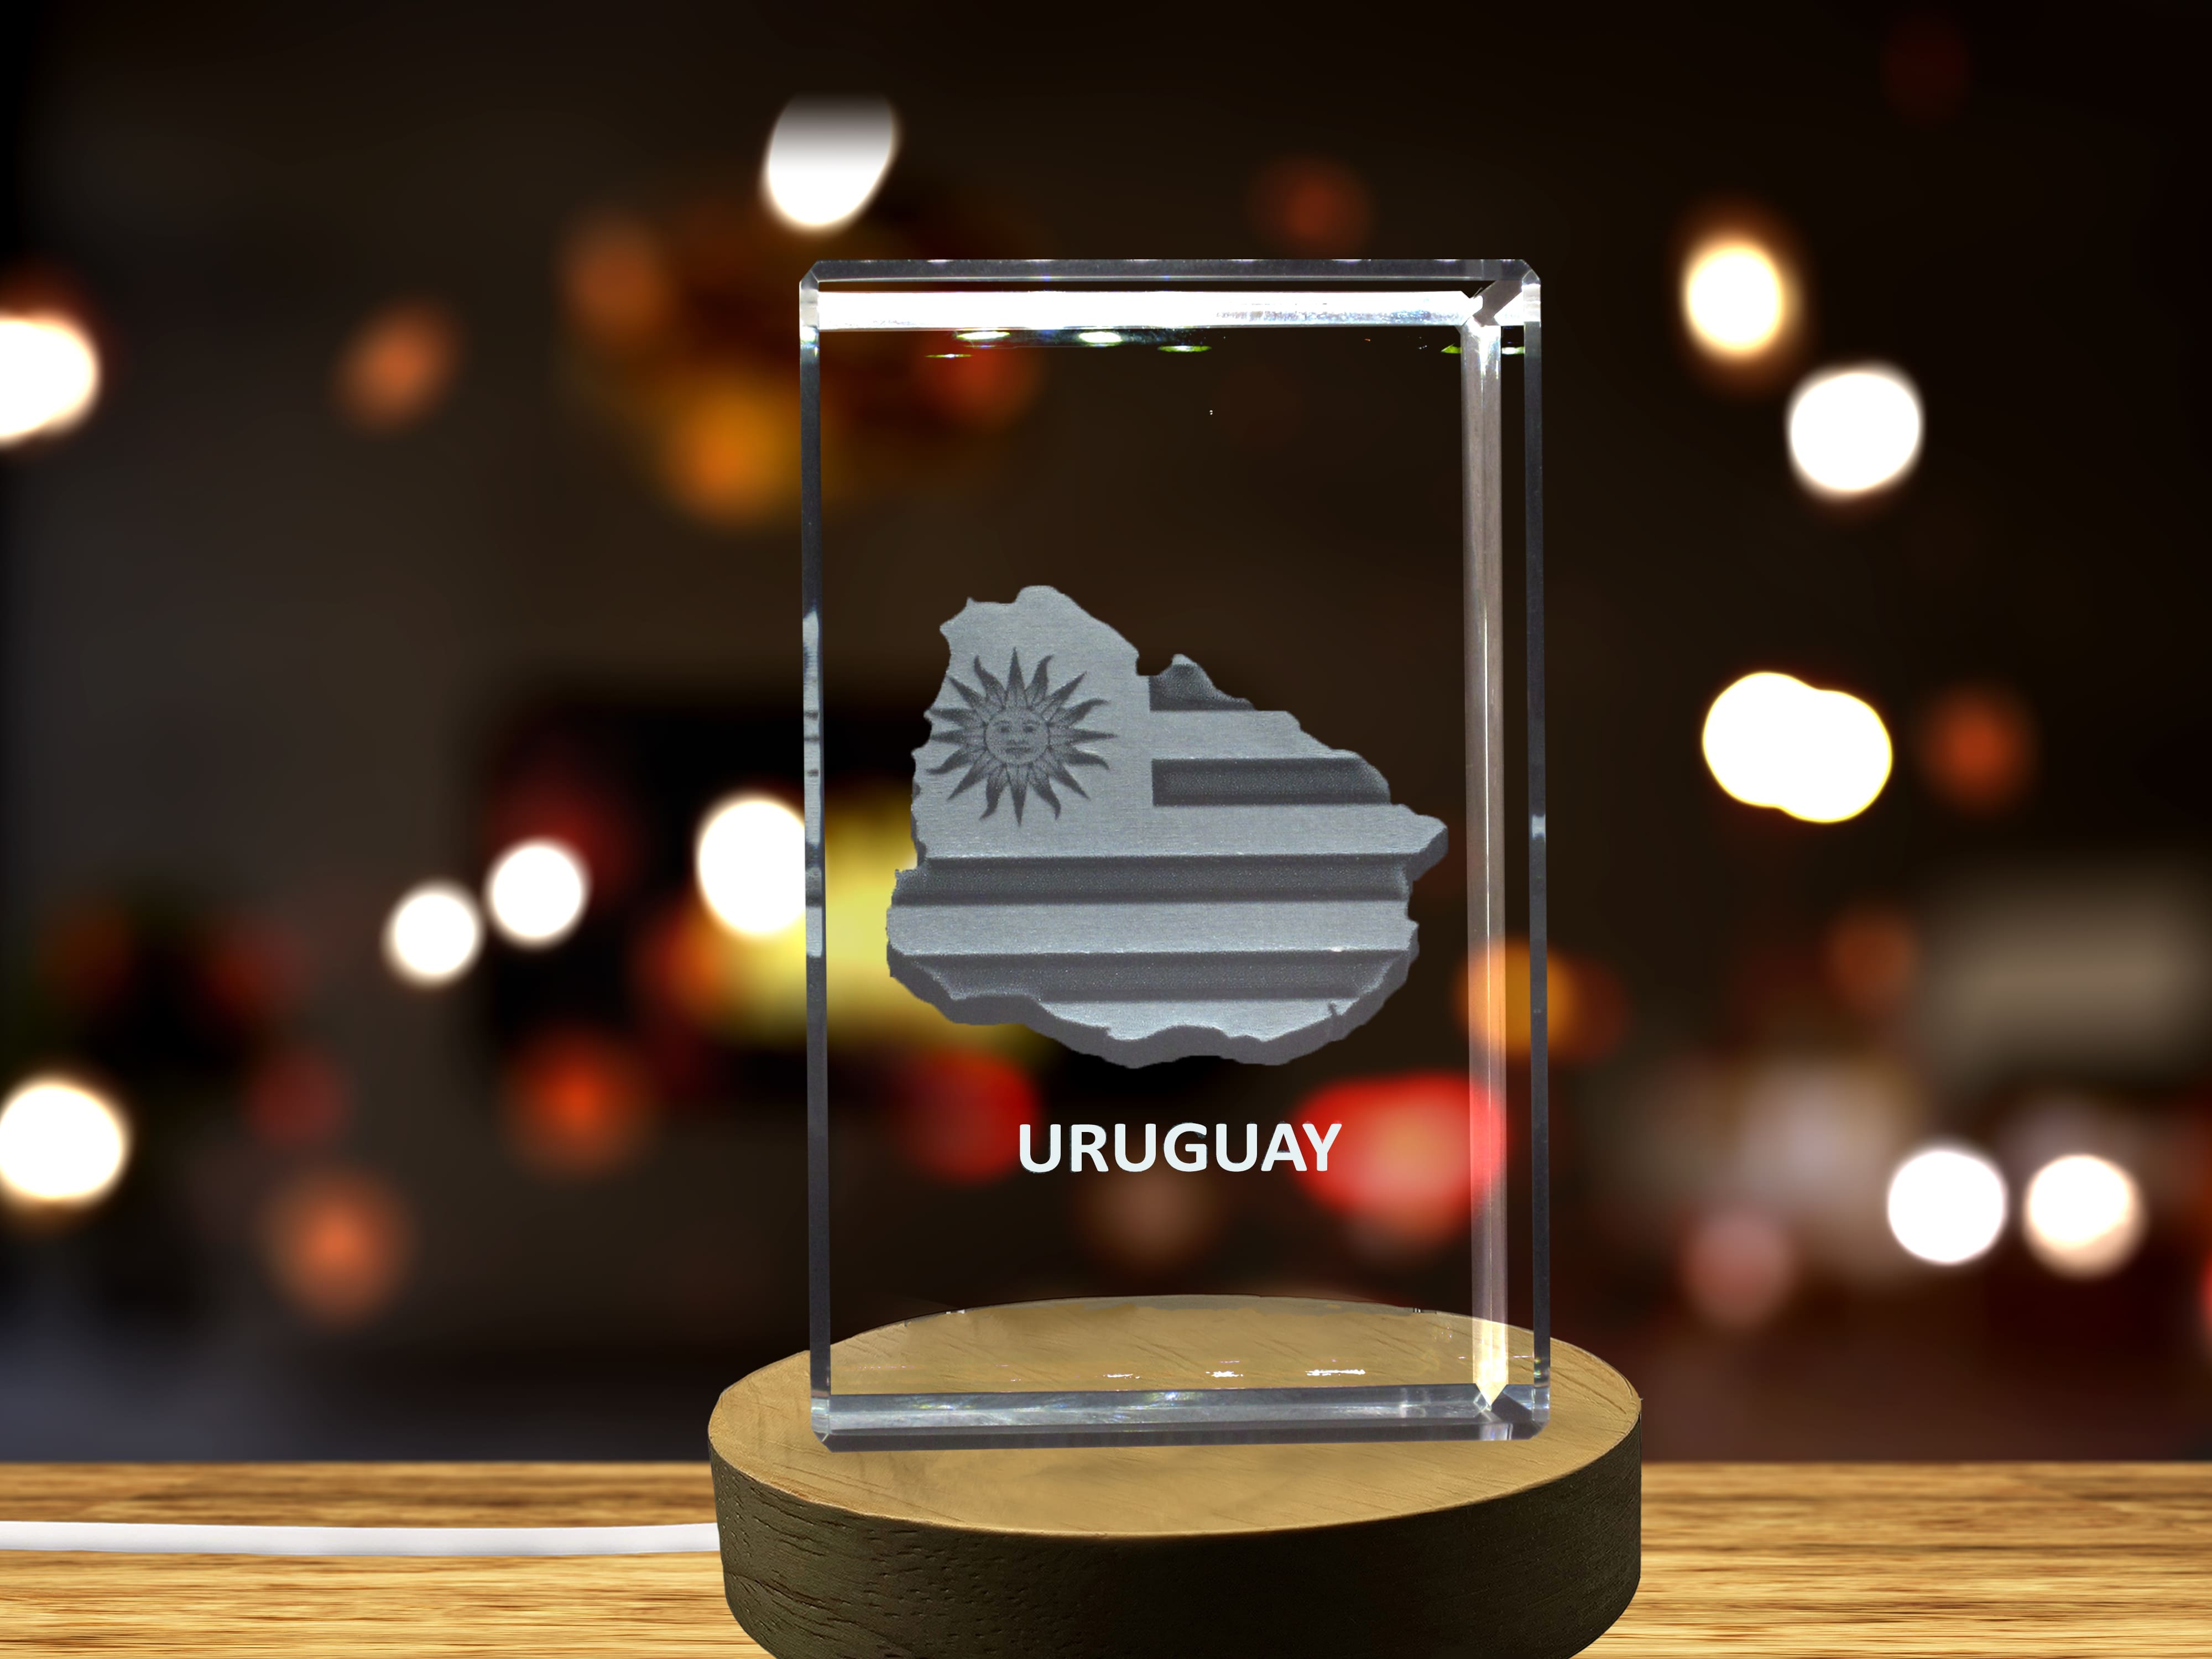 Uruguay 3D Engraved Crystal 3D Engraved Crystal Keepsake/Gift/Decor/Collectible/Souvenir A&B Crystal Collection